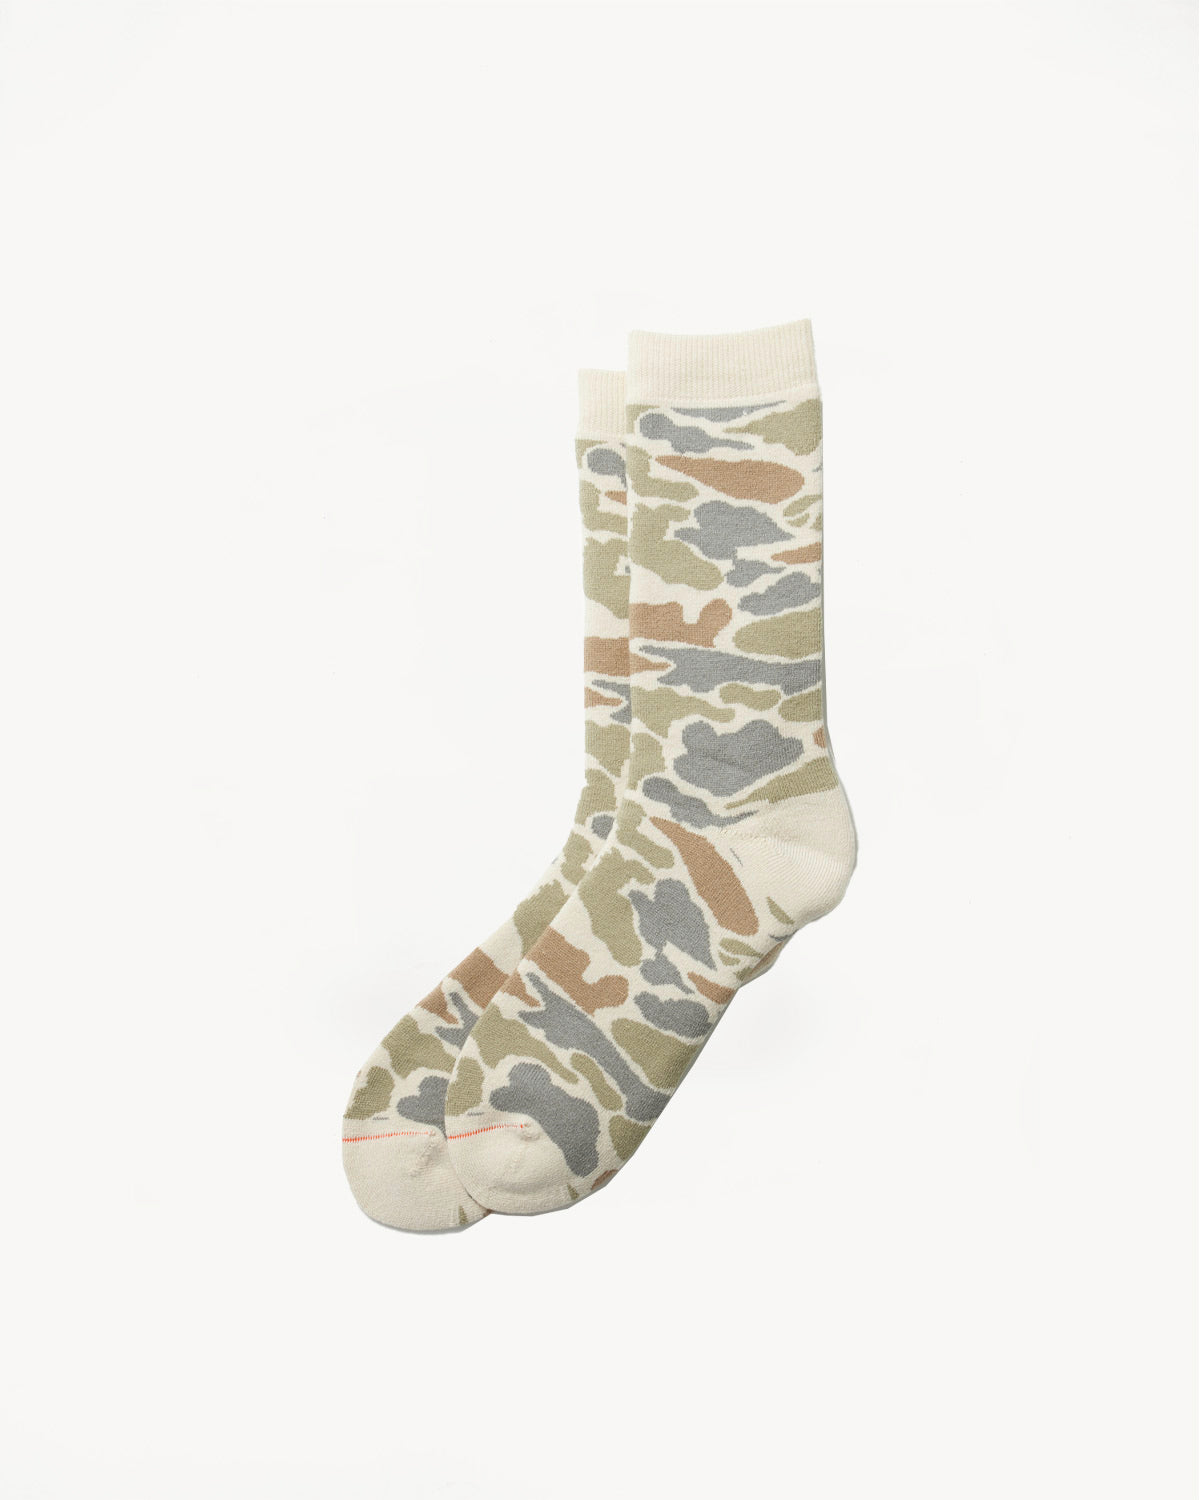 R1339 - Pile Camo Socks - Pastel